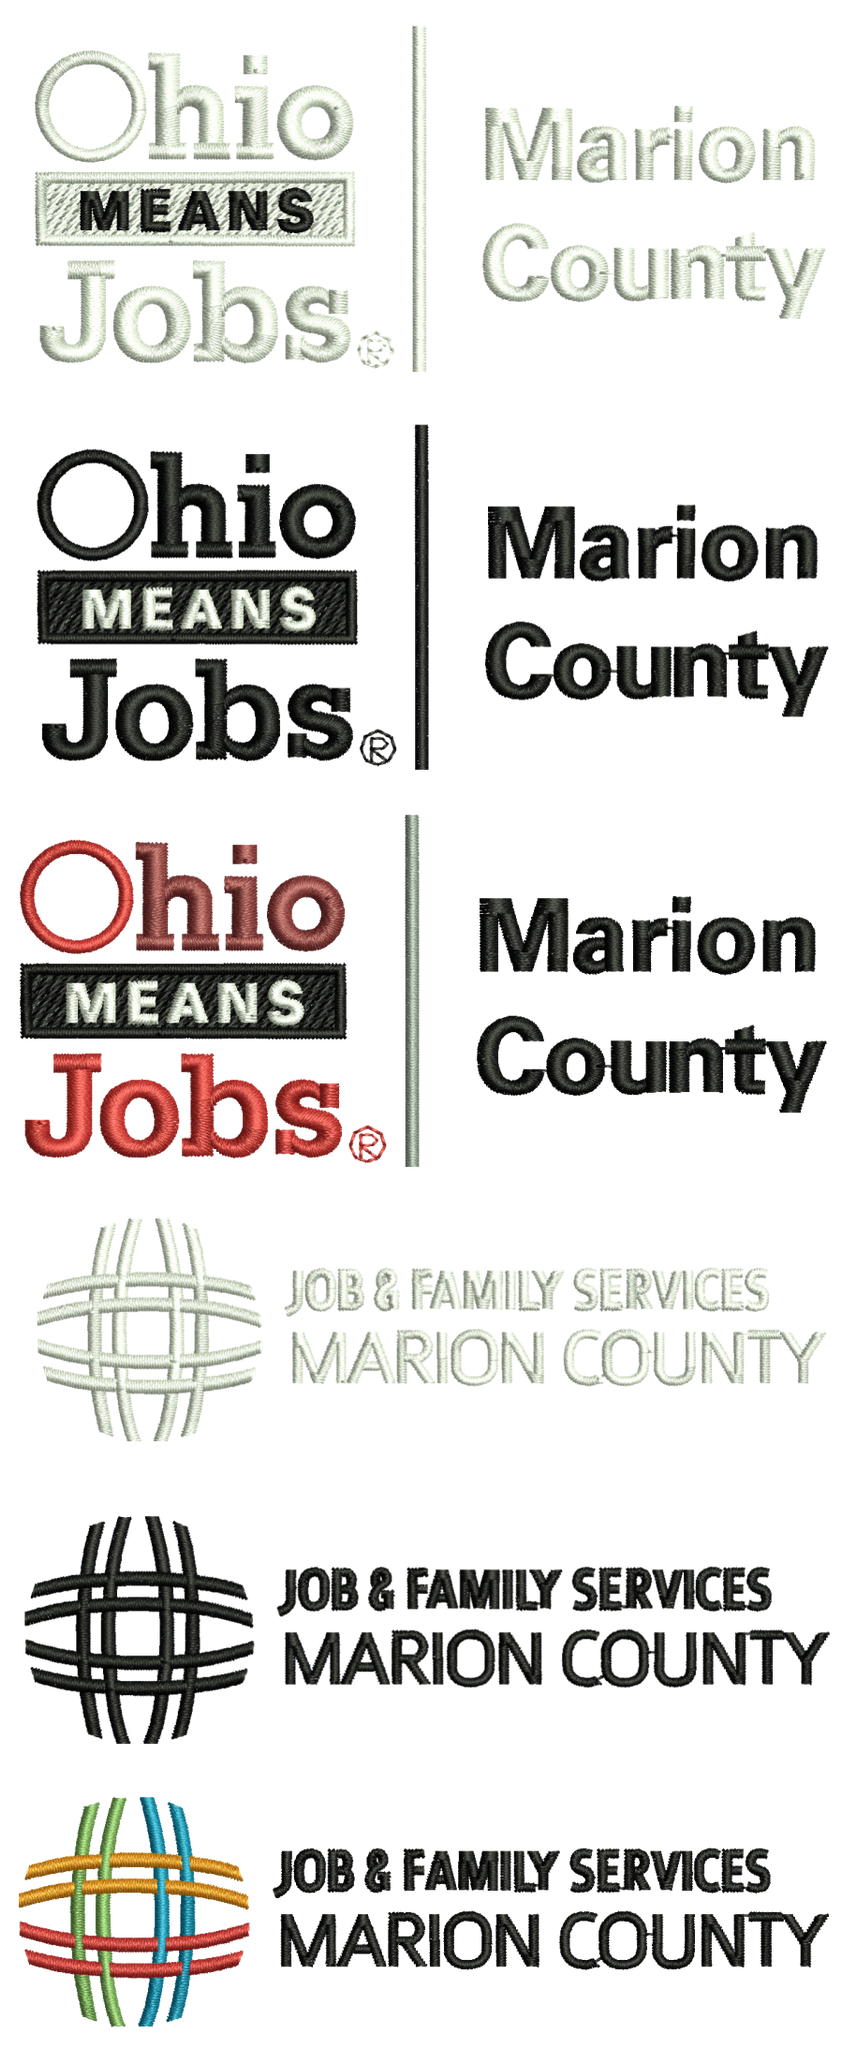 Marion County Jobs and Family Interlock Cardigan